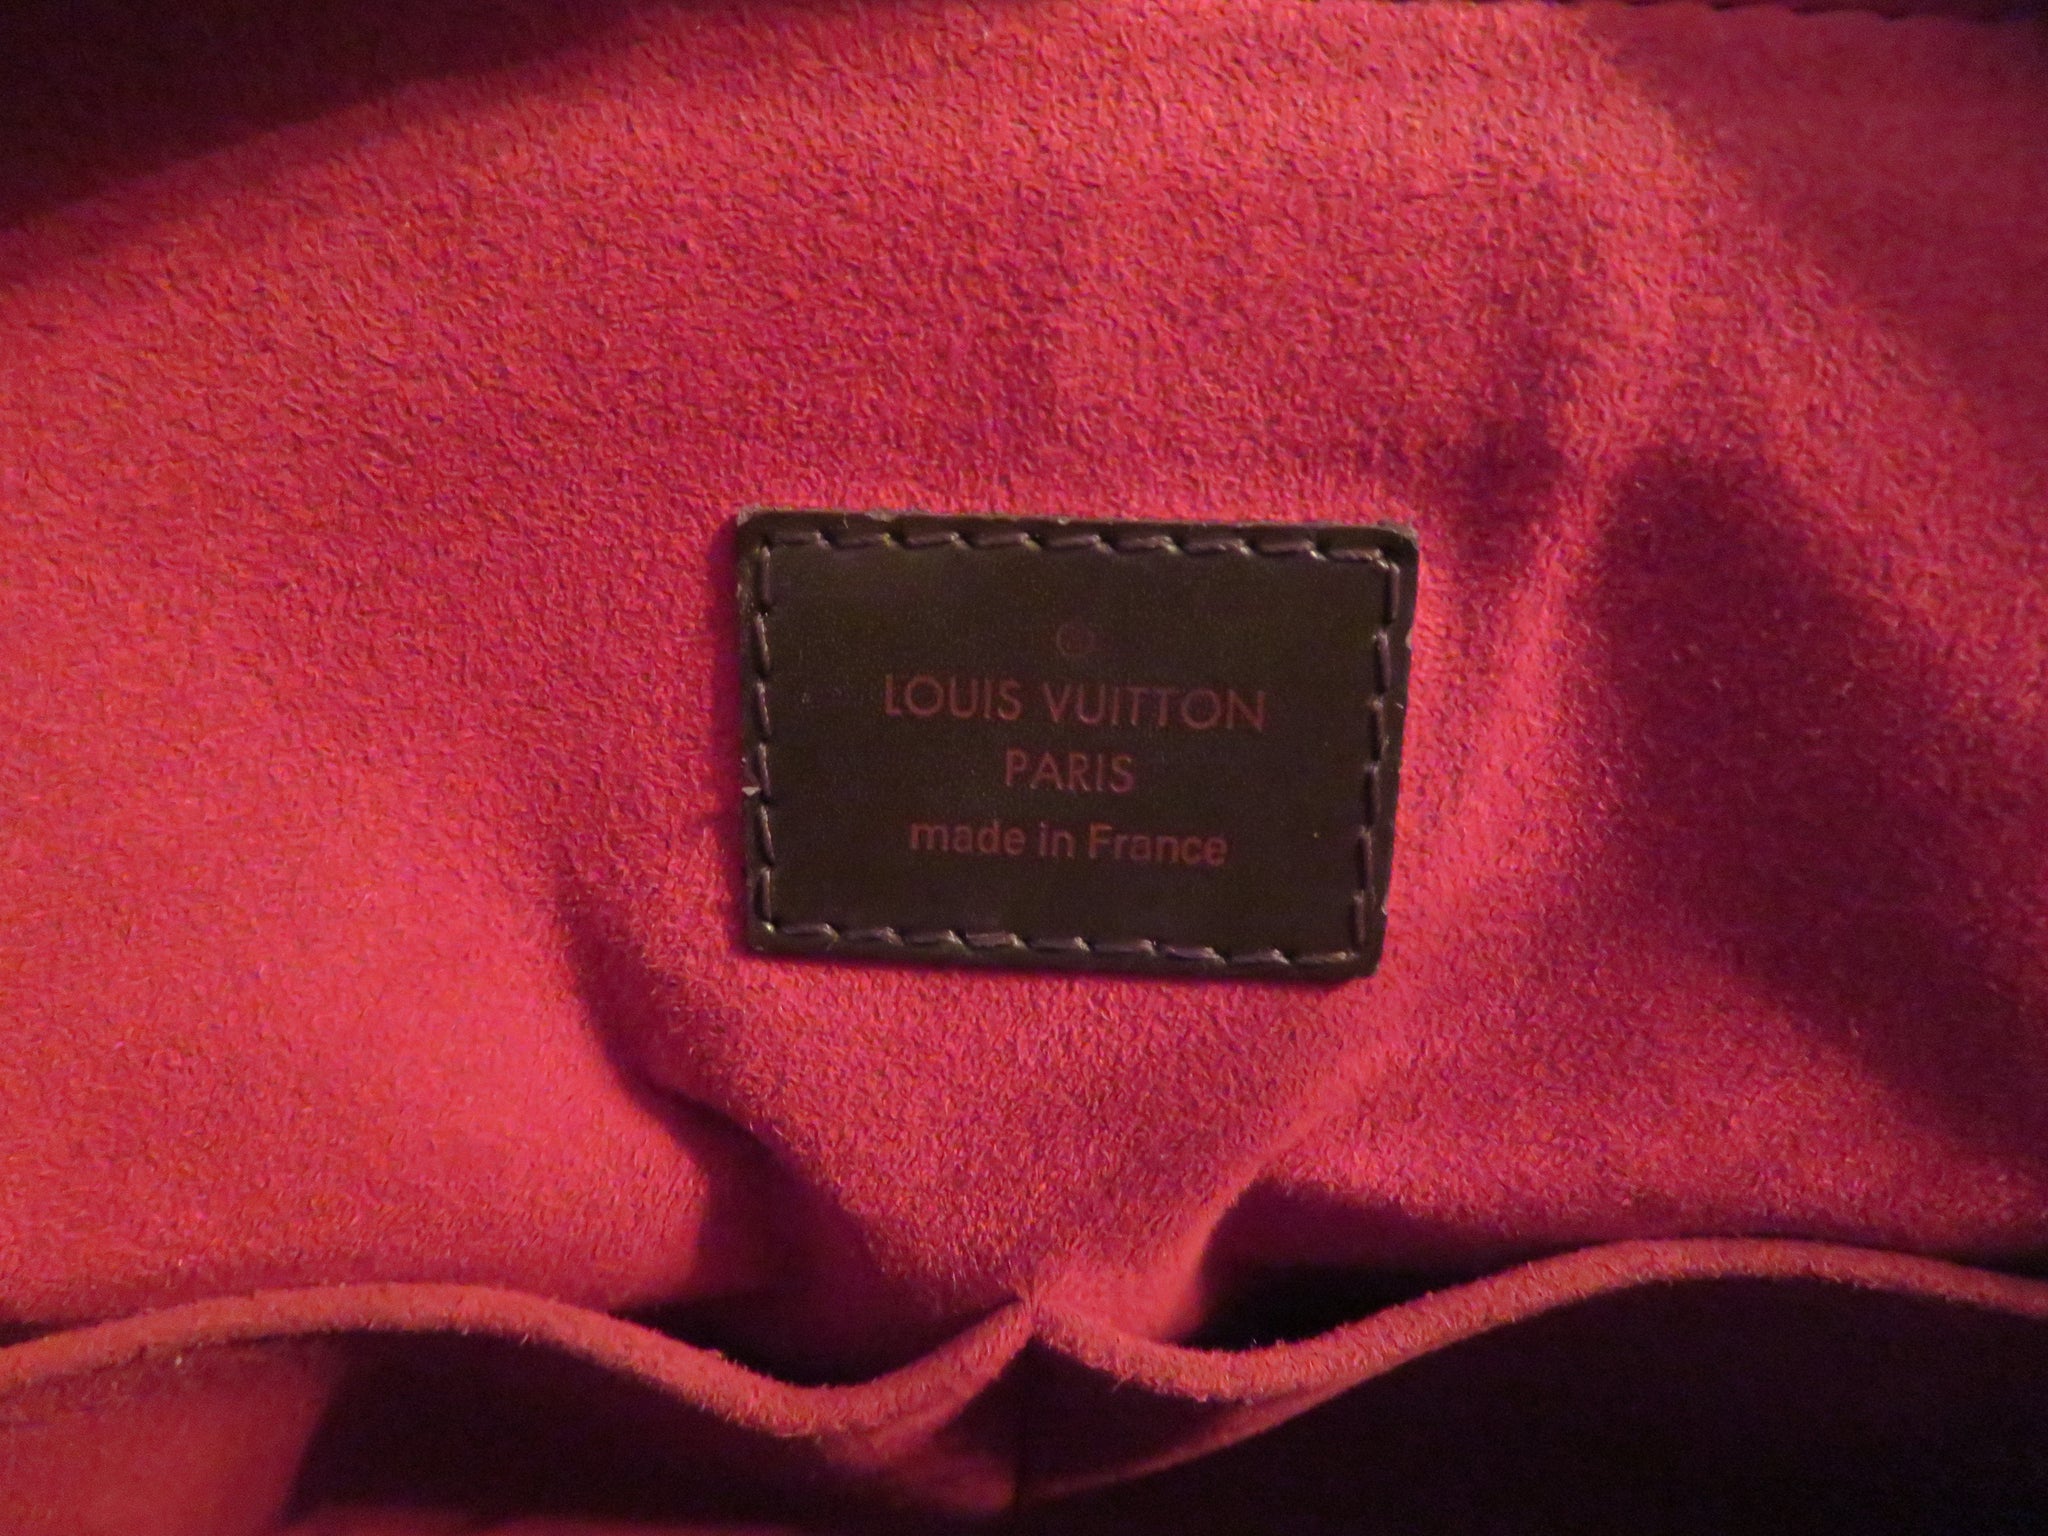 Louis Vuitton - Authenticated Trevi Handbag - Leather Brown Plain for Women, Good Condition